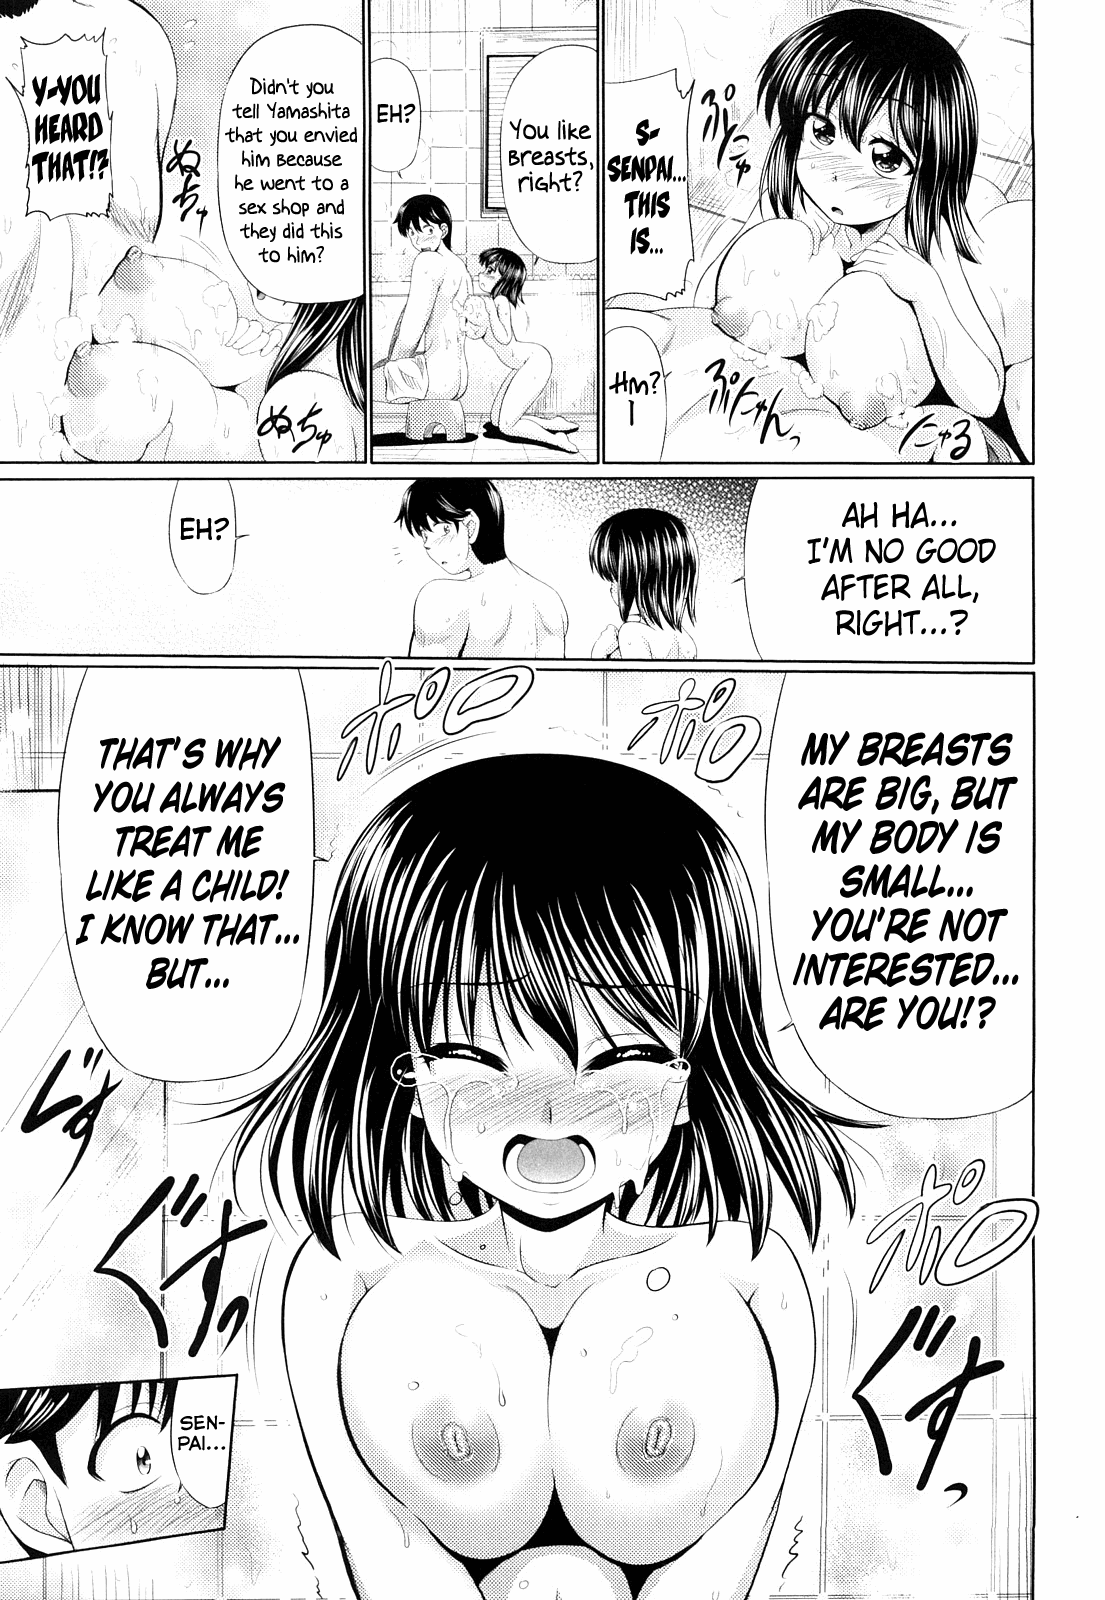 Naked manga brother and sister having sex